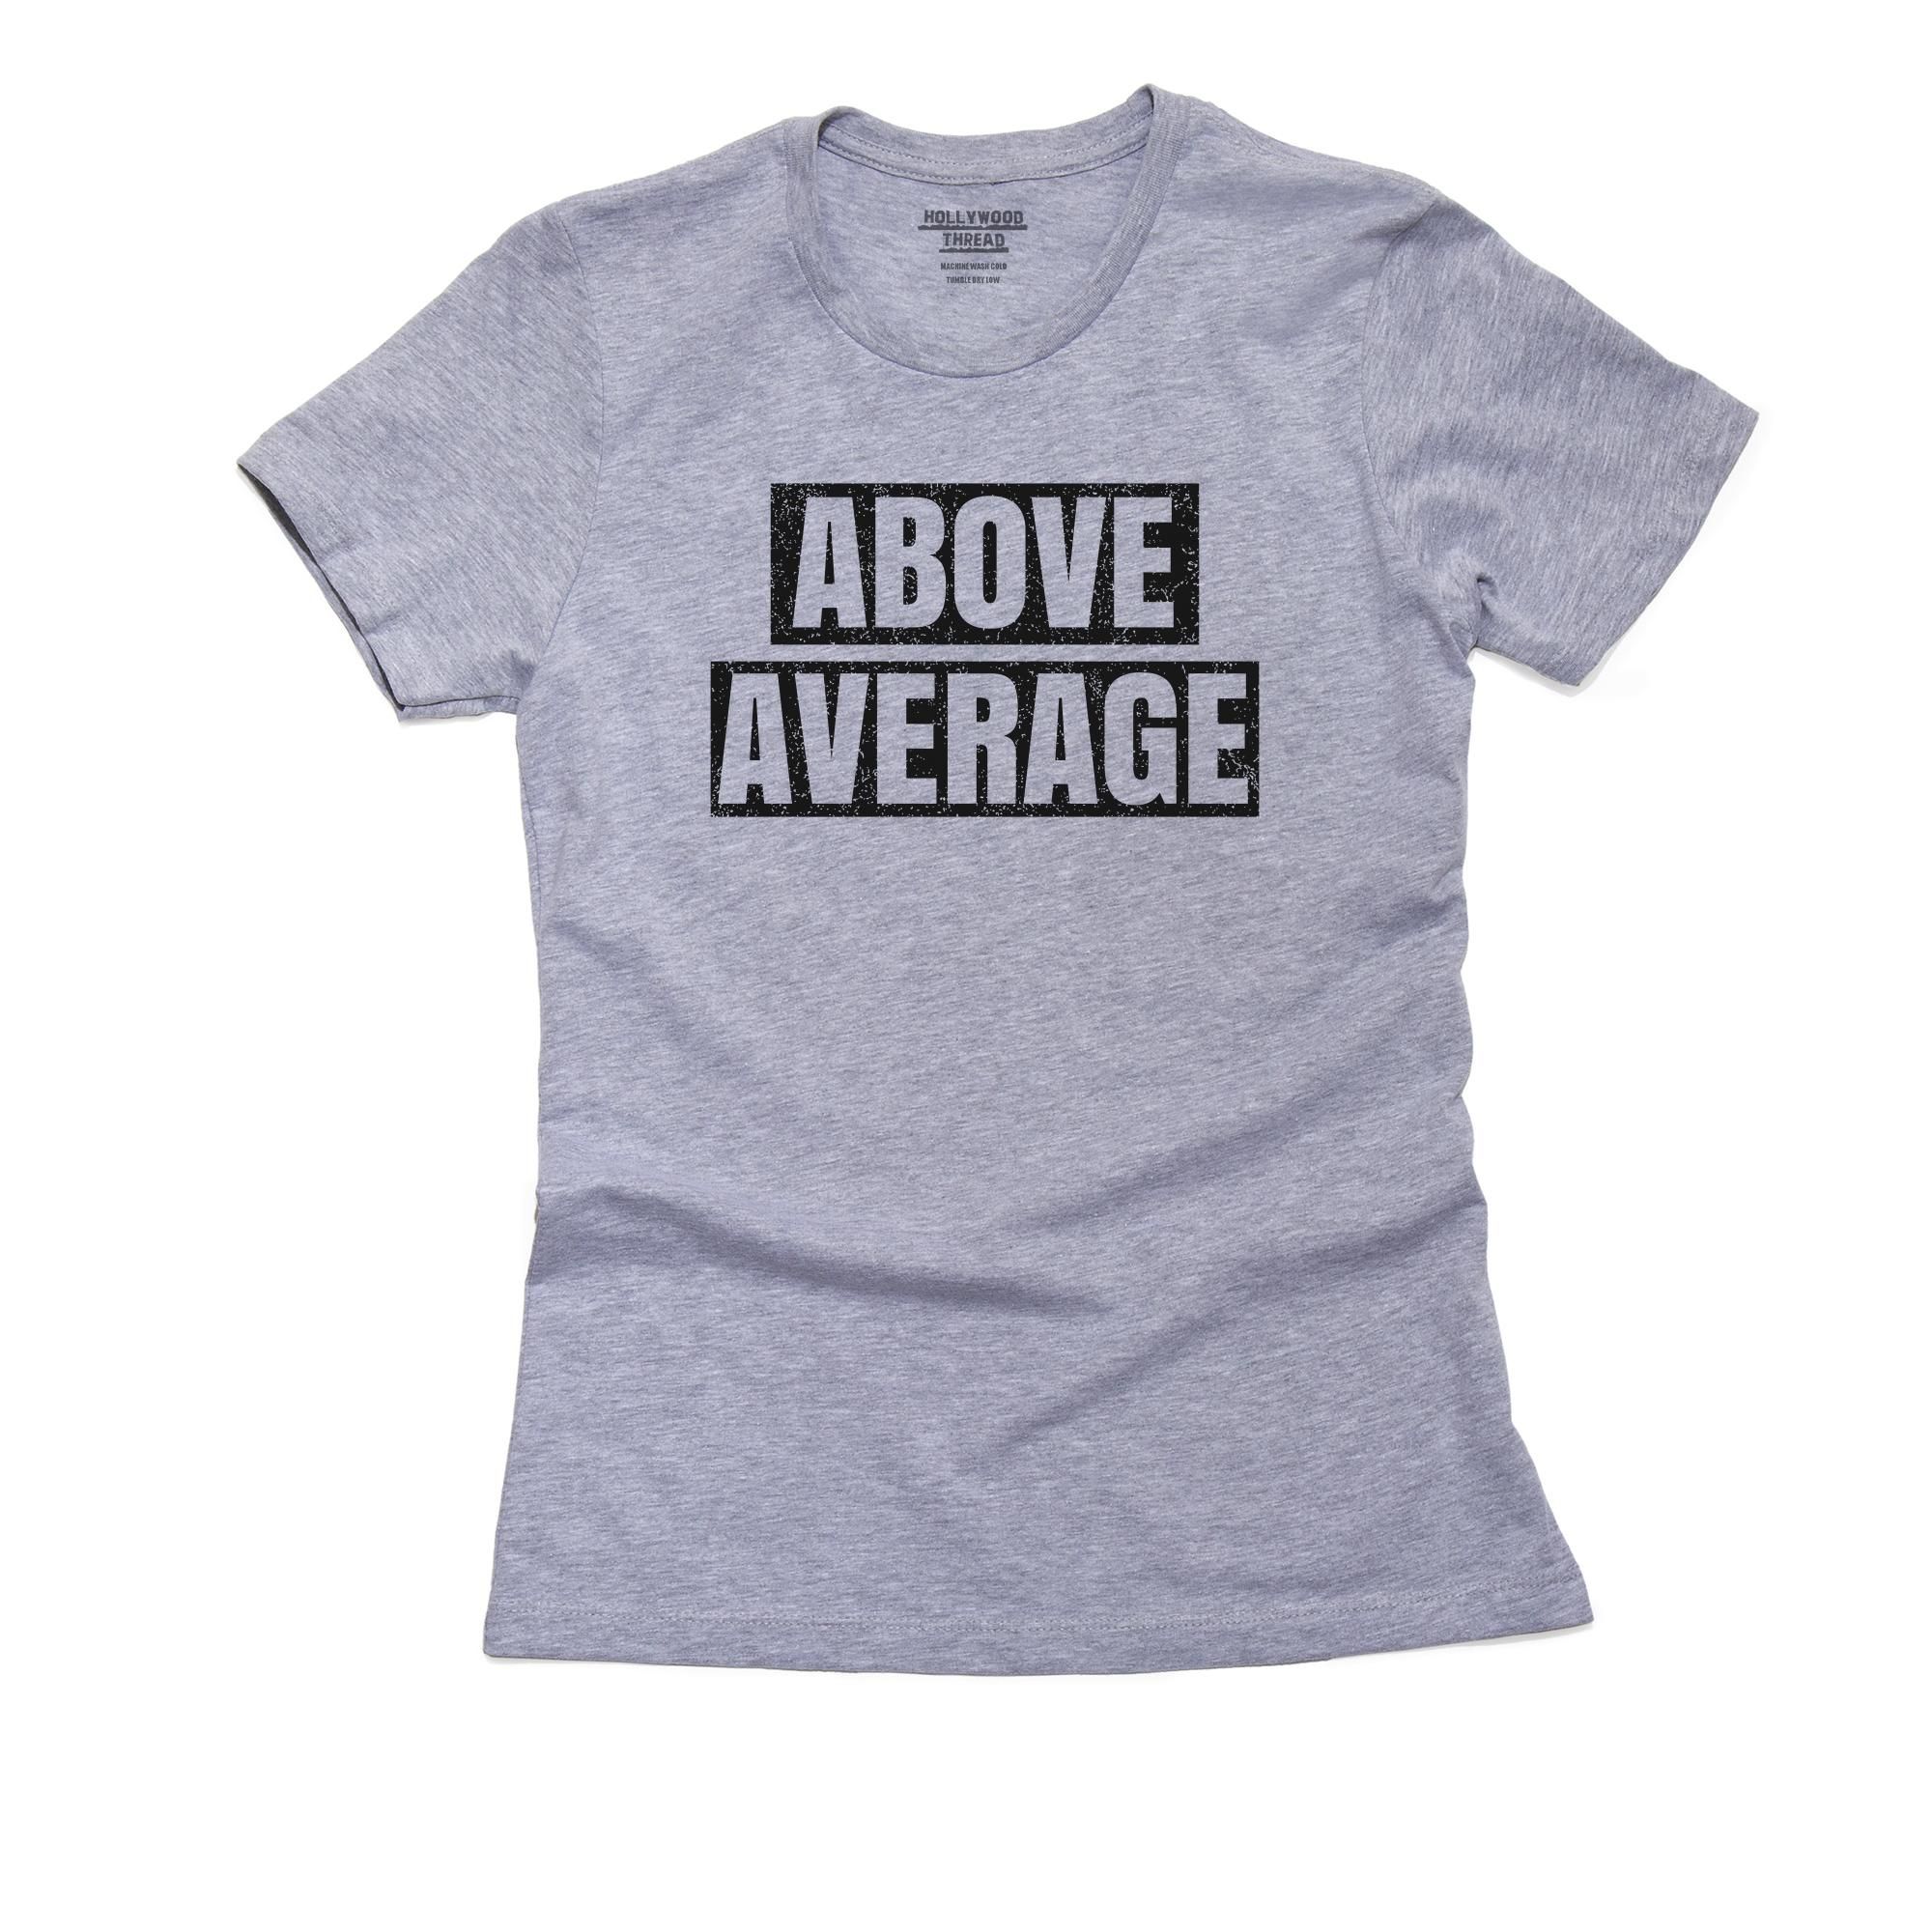 Above Average - Best #1 Banner Graphic - First Place Women's Cotton Grey T-Shirt | Walmart (US)